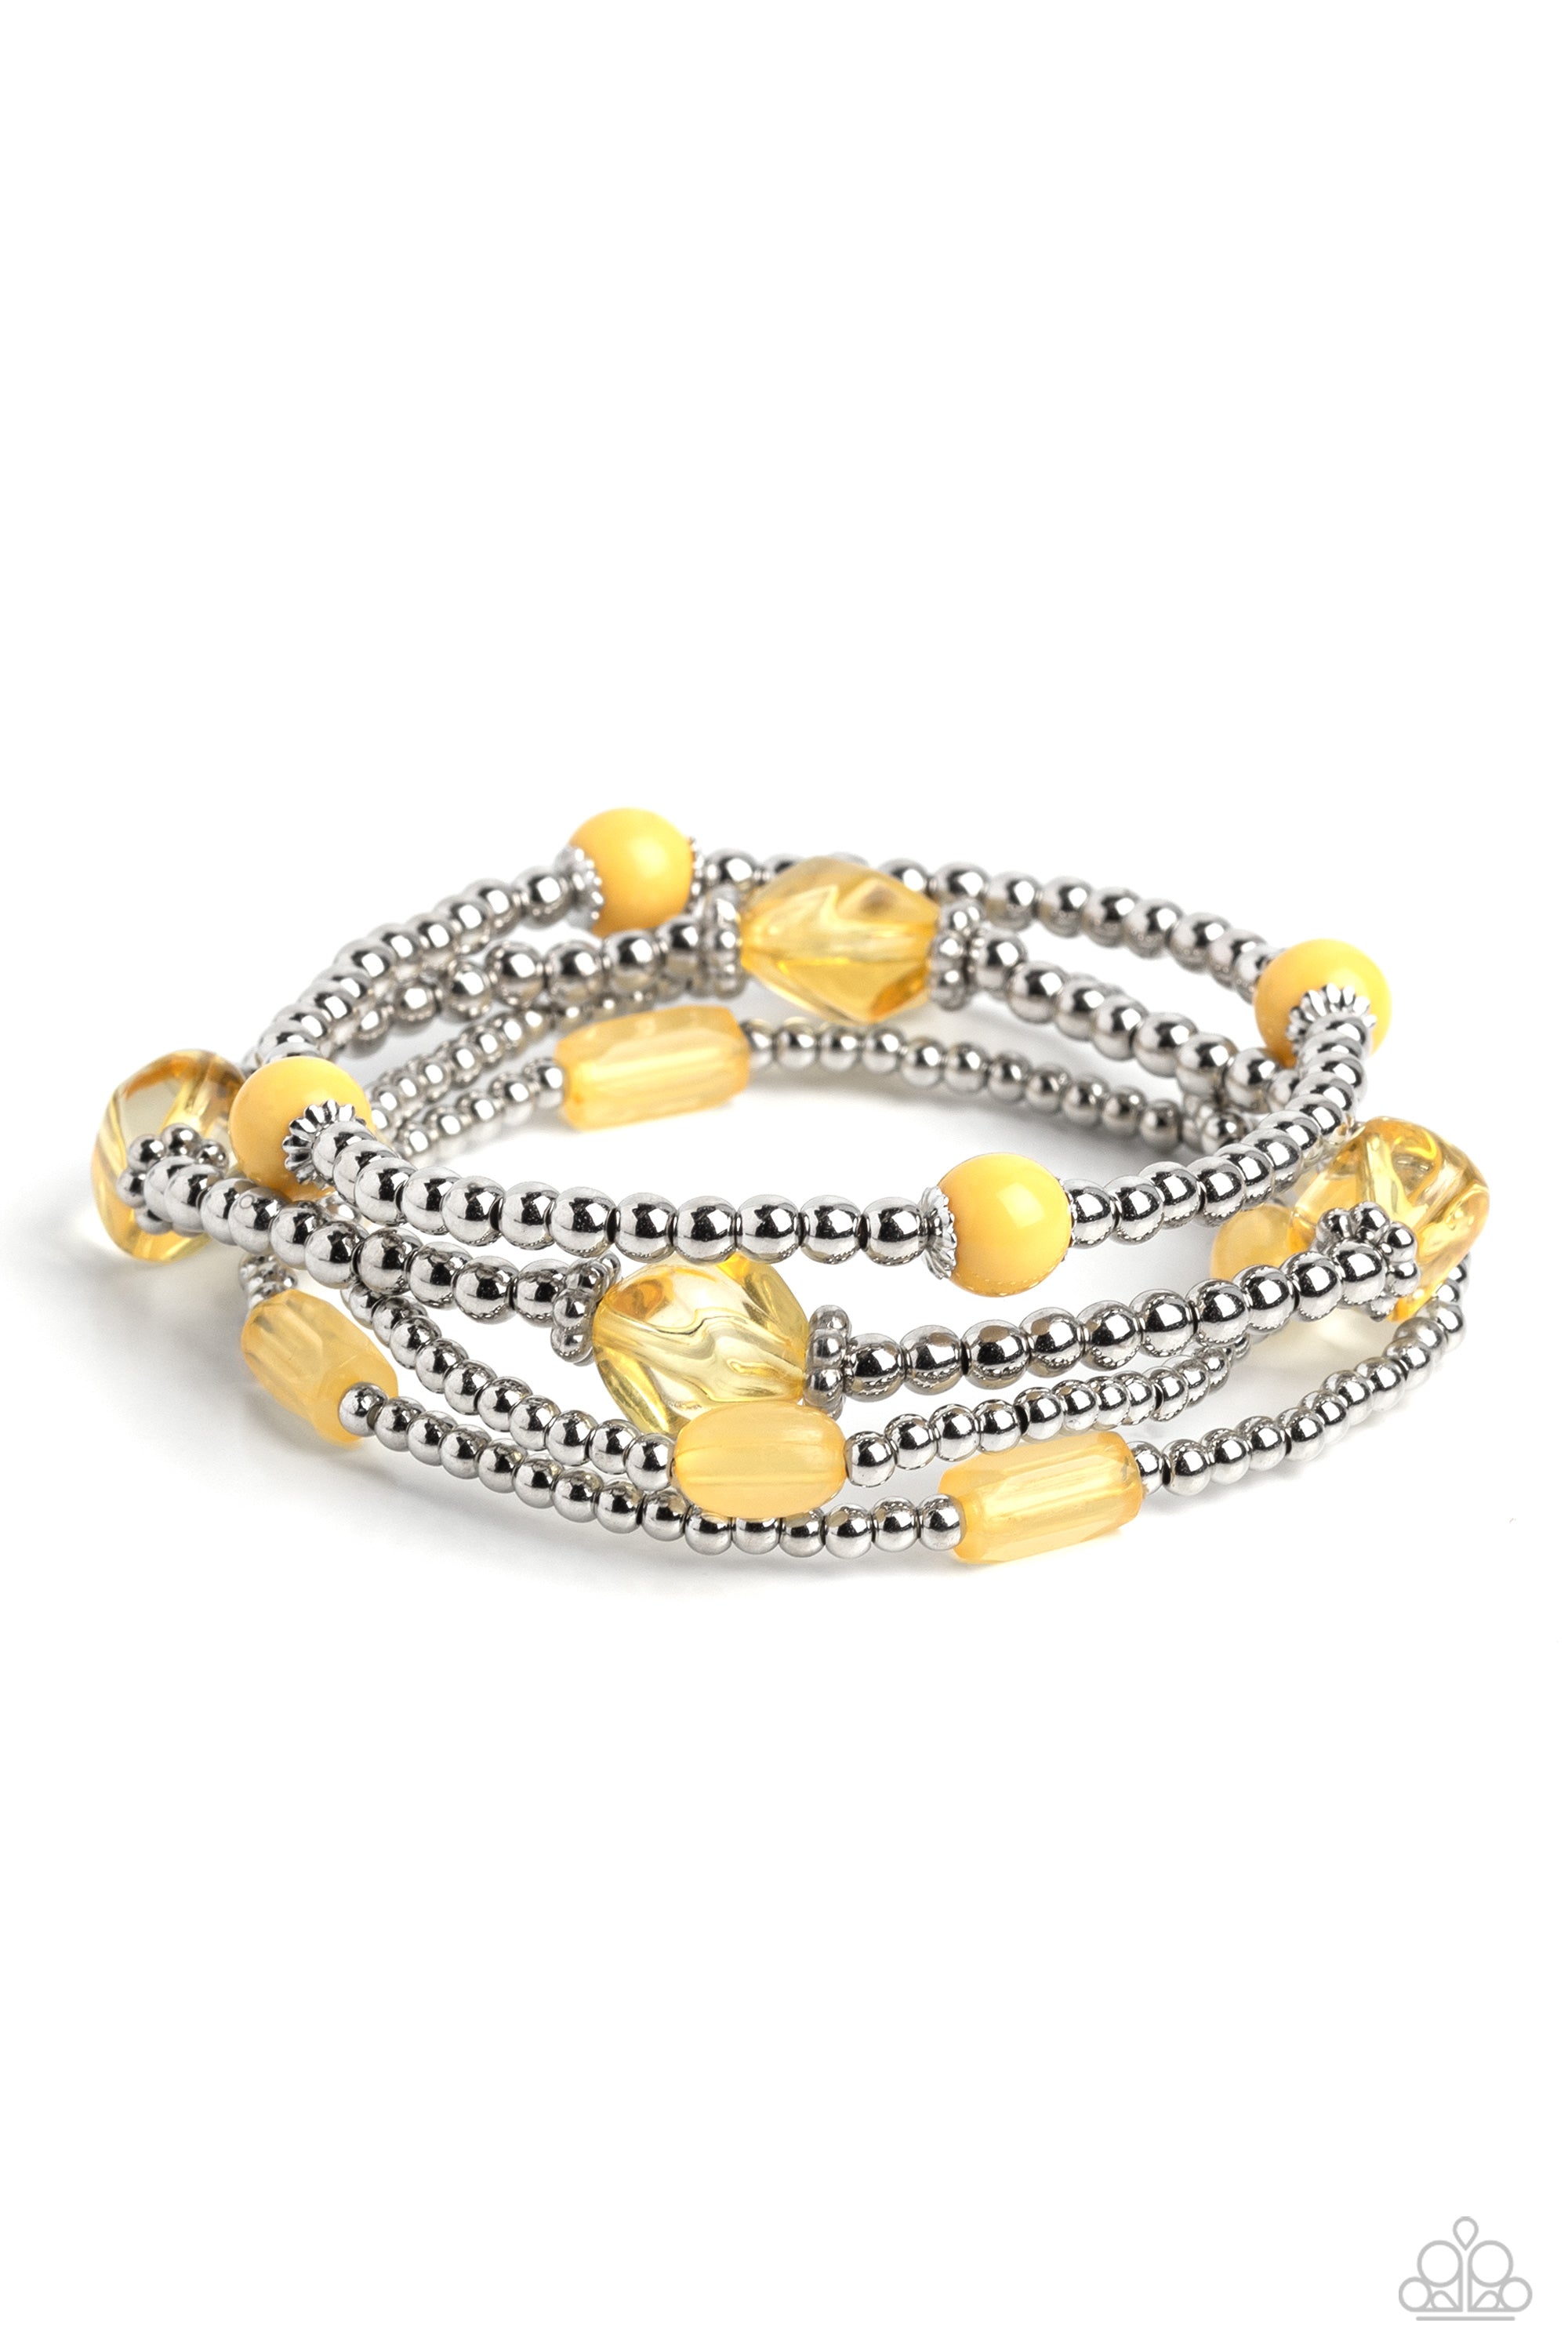 Geometric Guru Yellow Bracelet- lightbox - CarasShop.com - $5 Jewelry by Cara Jewels